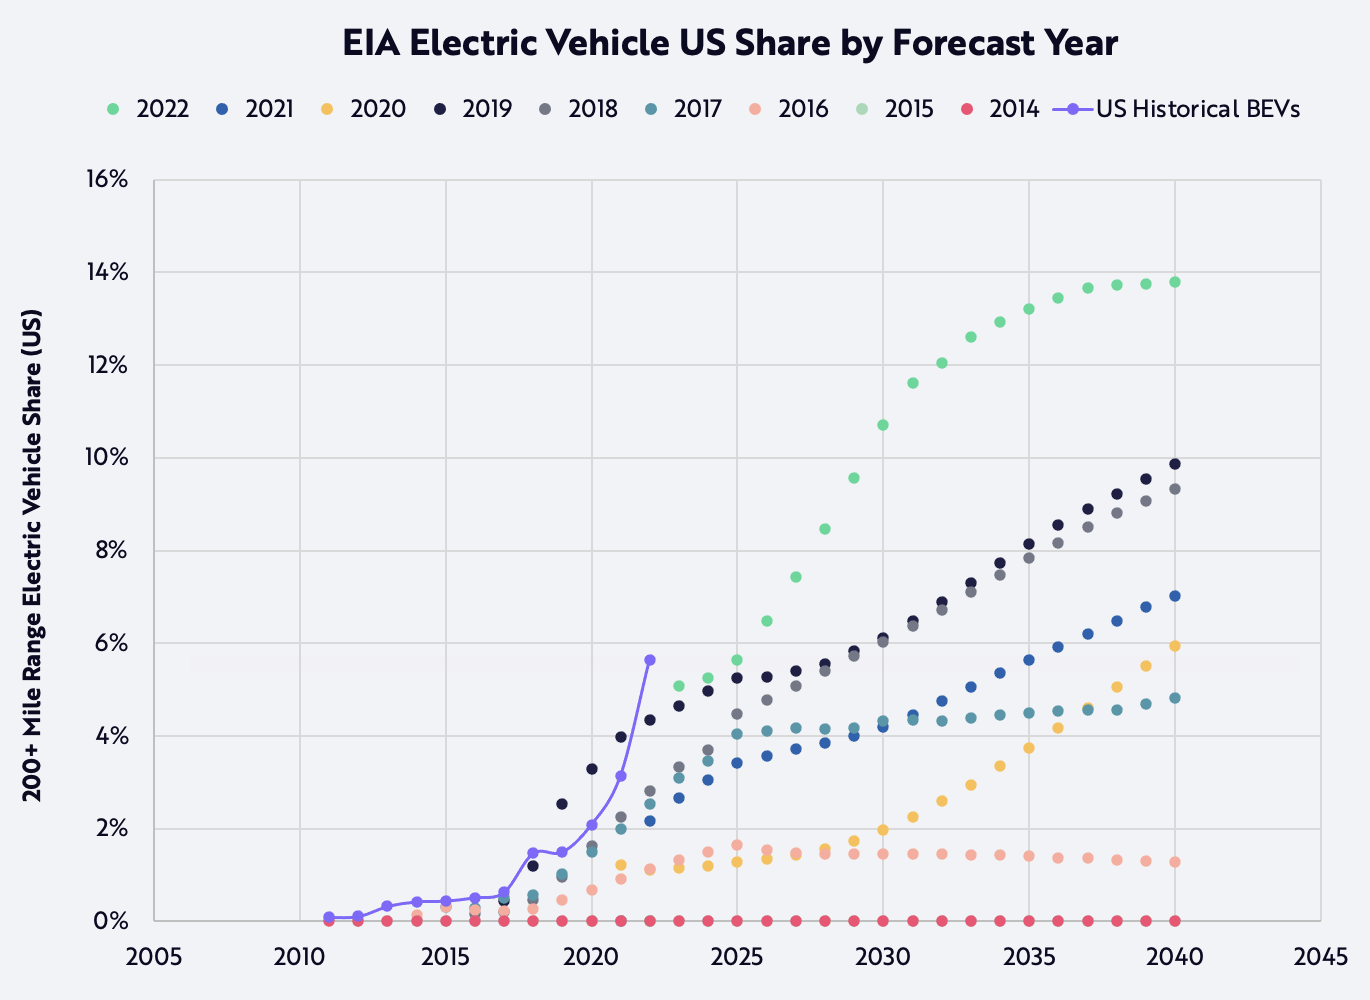 cybertruck, sam korus, tesla, EVs, electric vehicles, electric cars, EIA forecasts